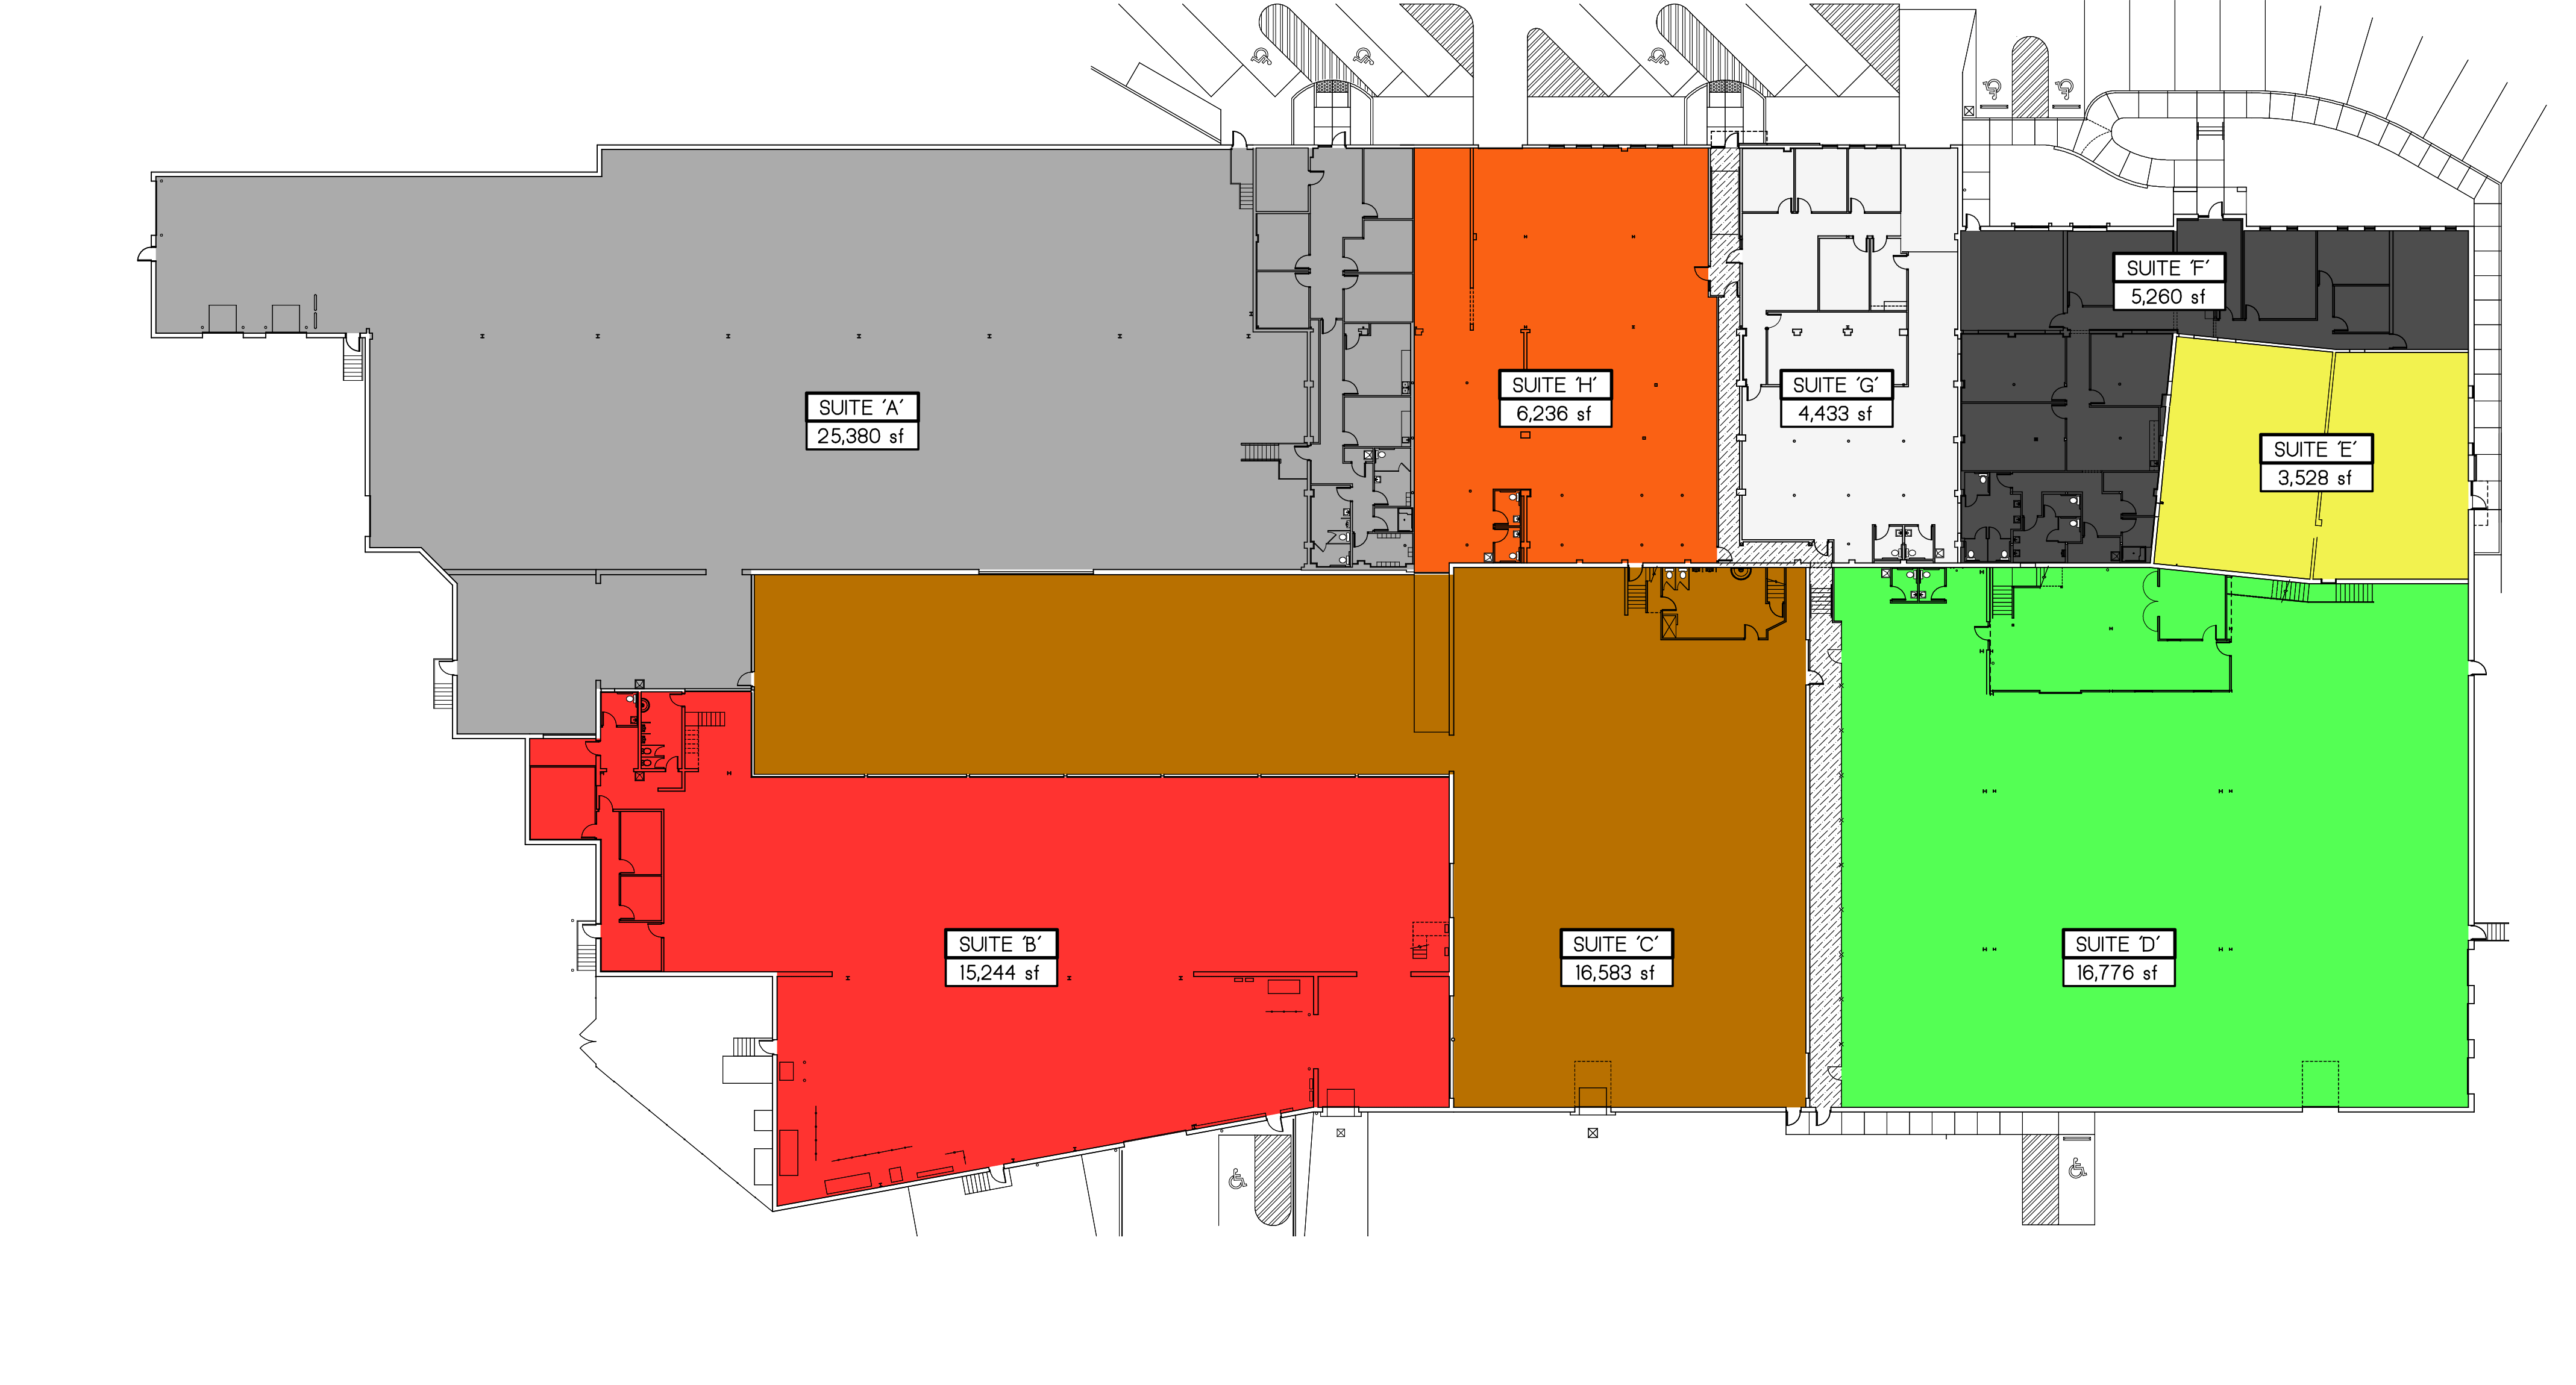 Whole complex floorplan